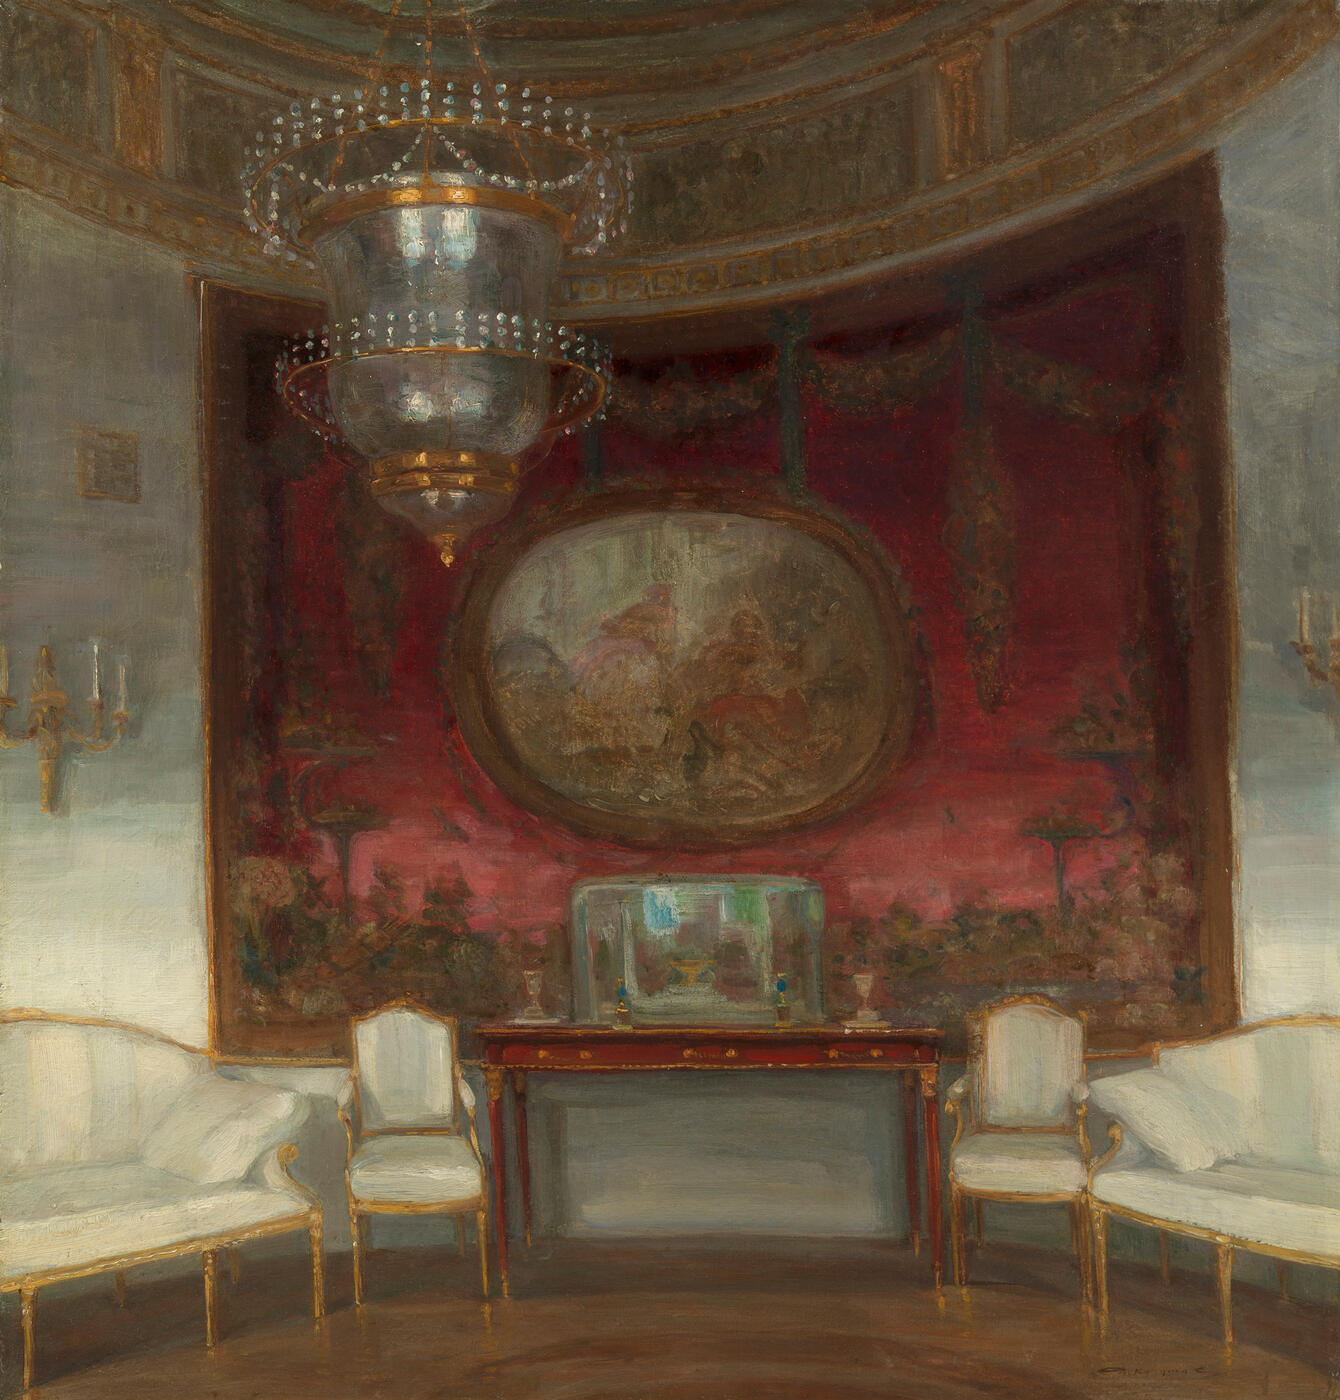 Gobelin Room in Pavlovsk Palace, St Petersburg